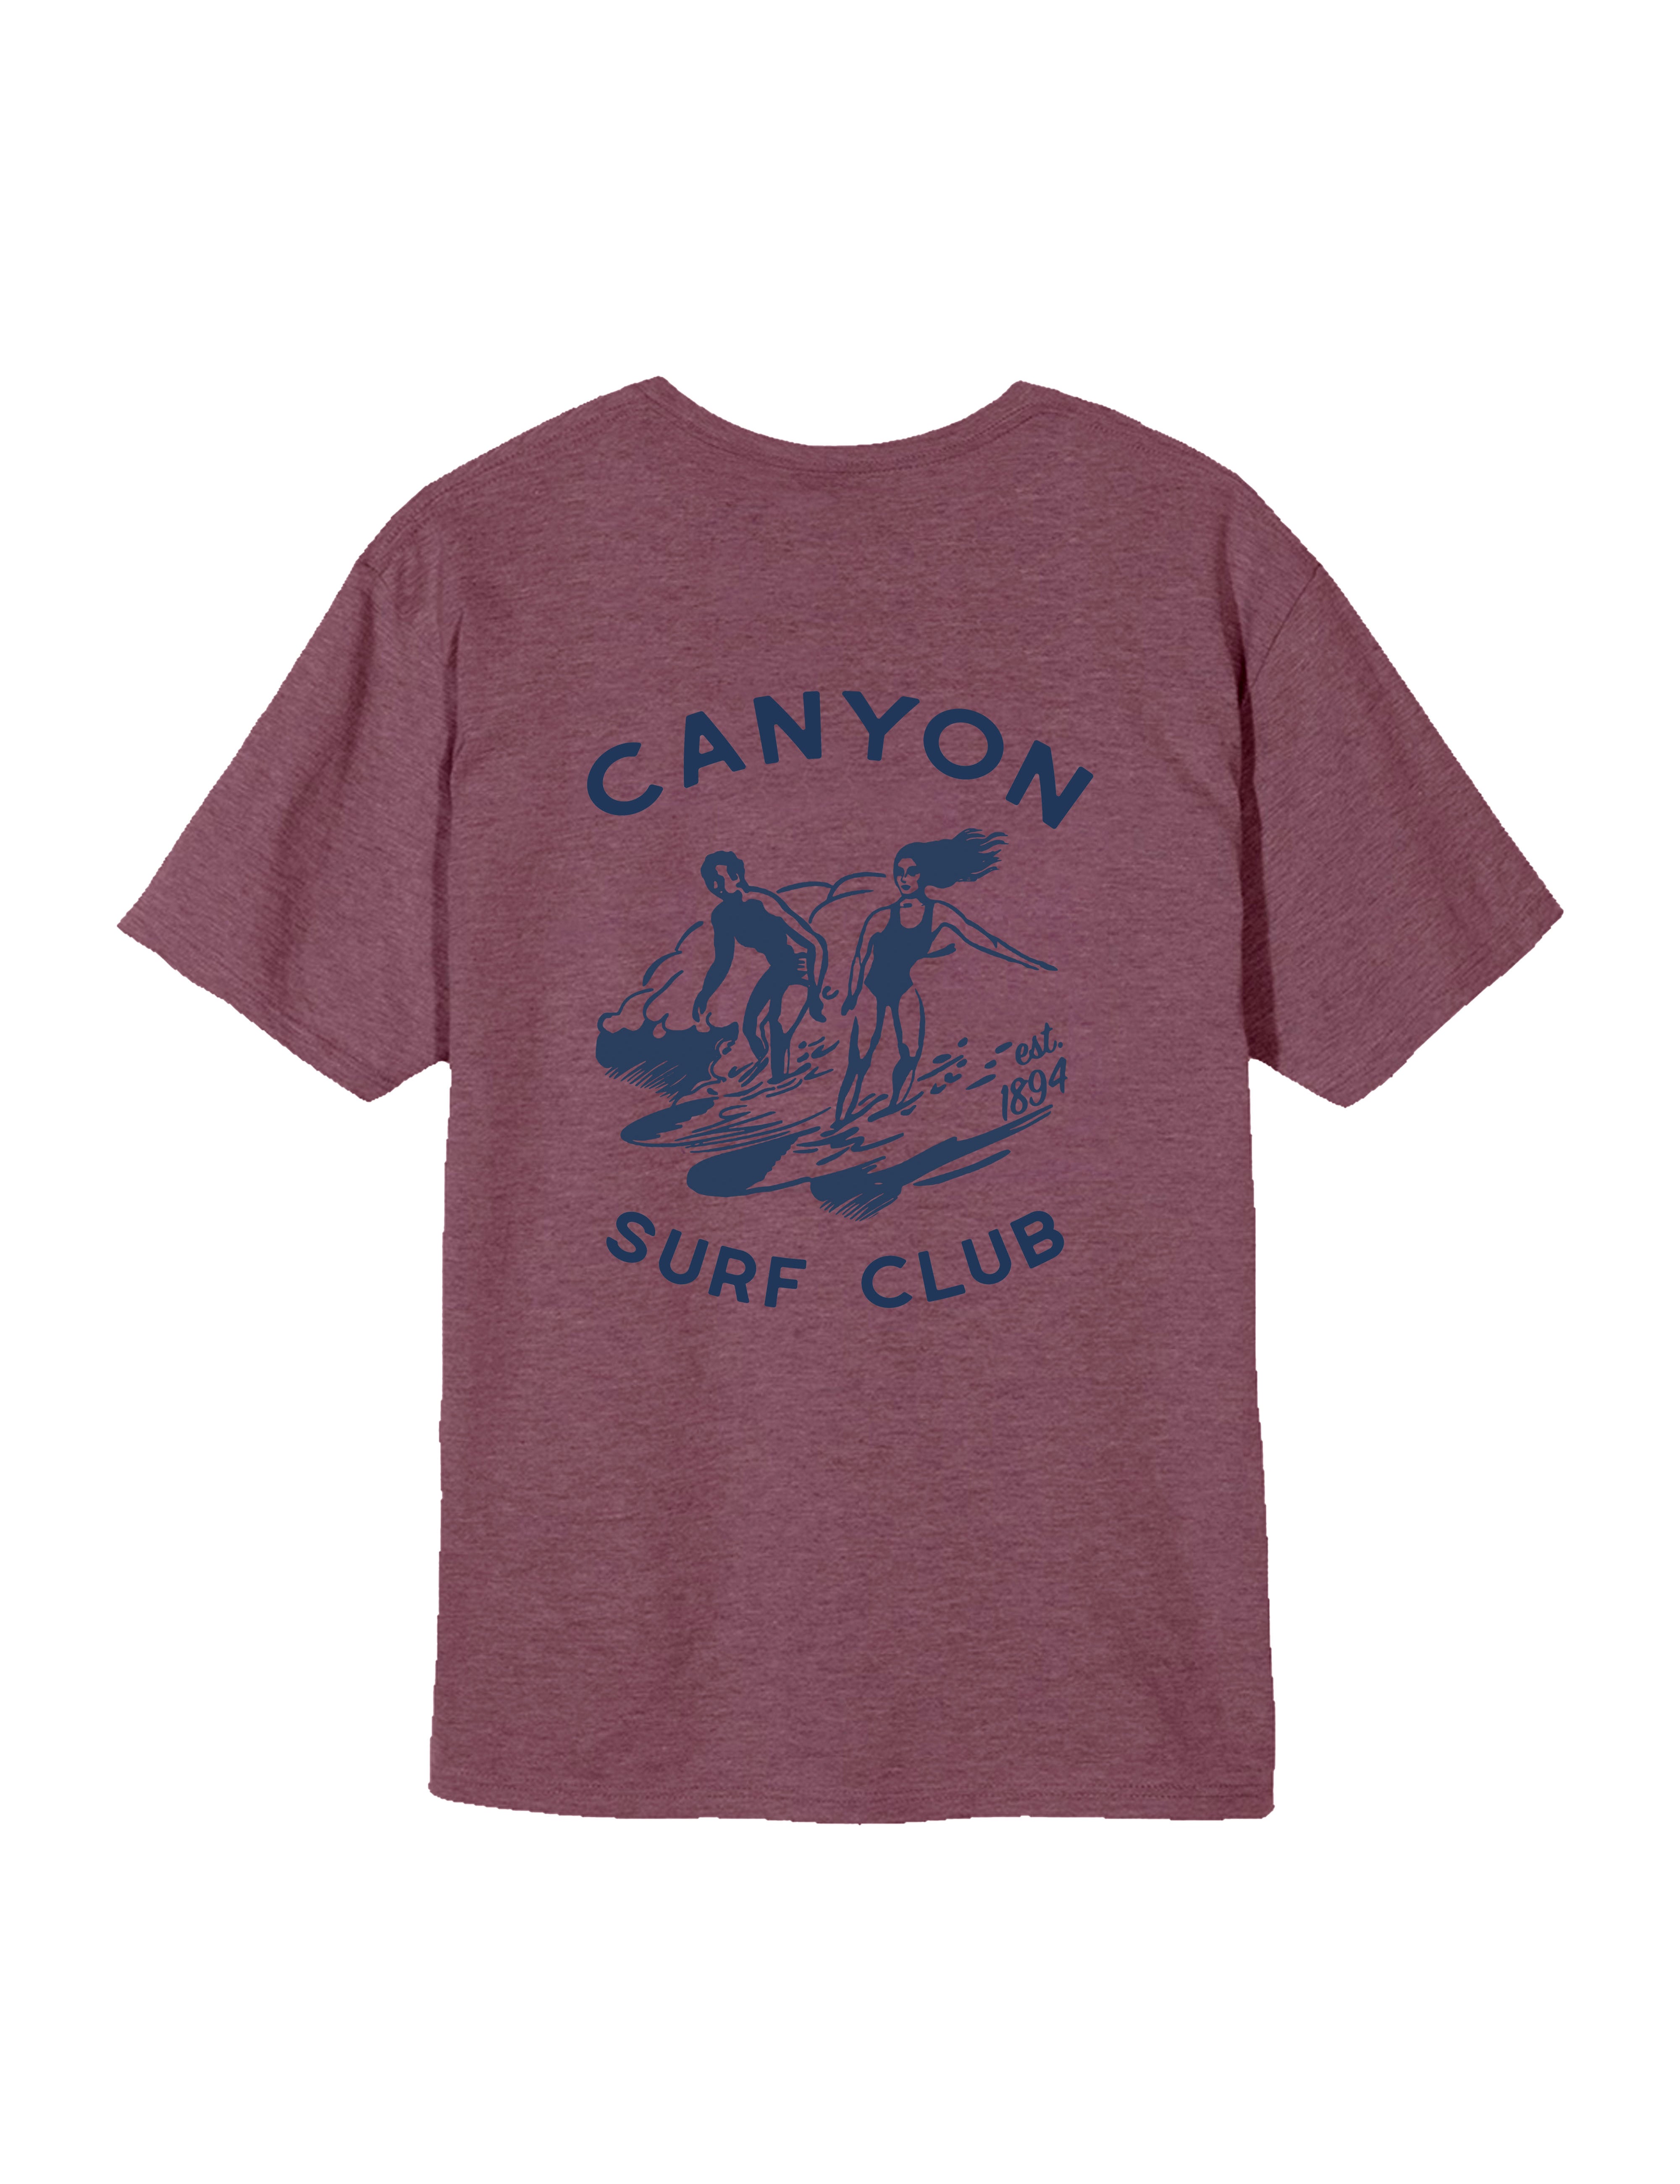 Canyonsurfclubbrickback.jpg